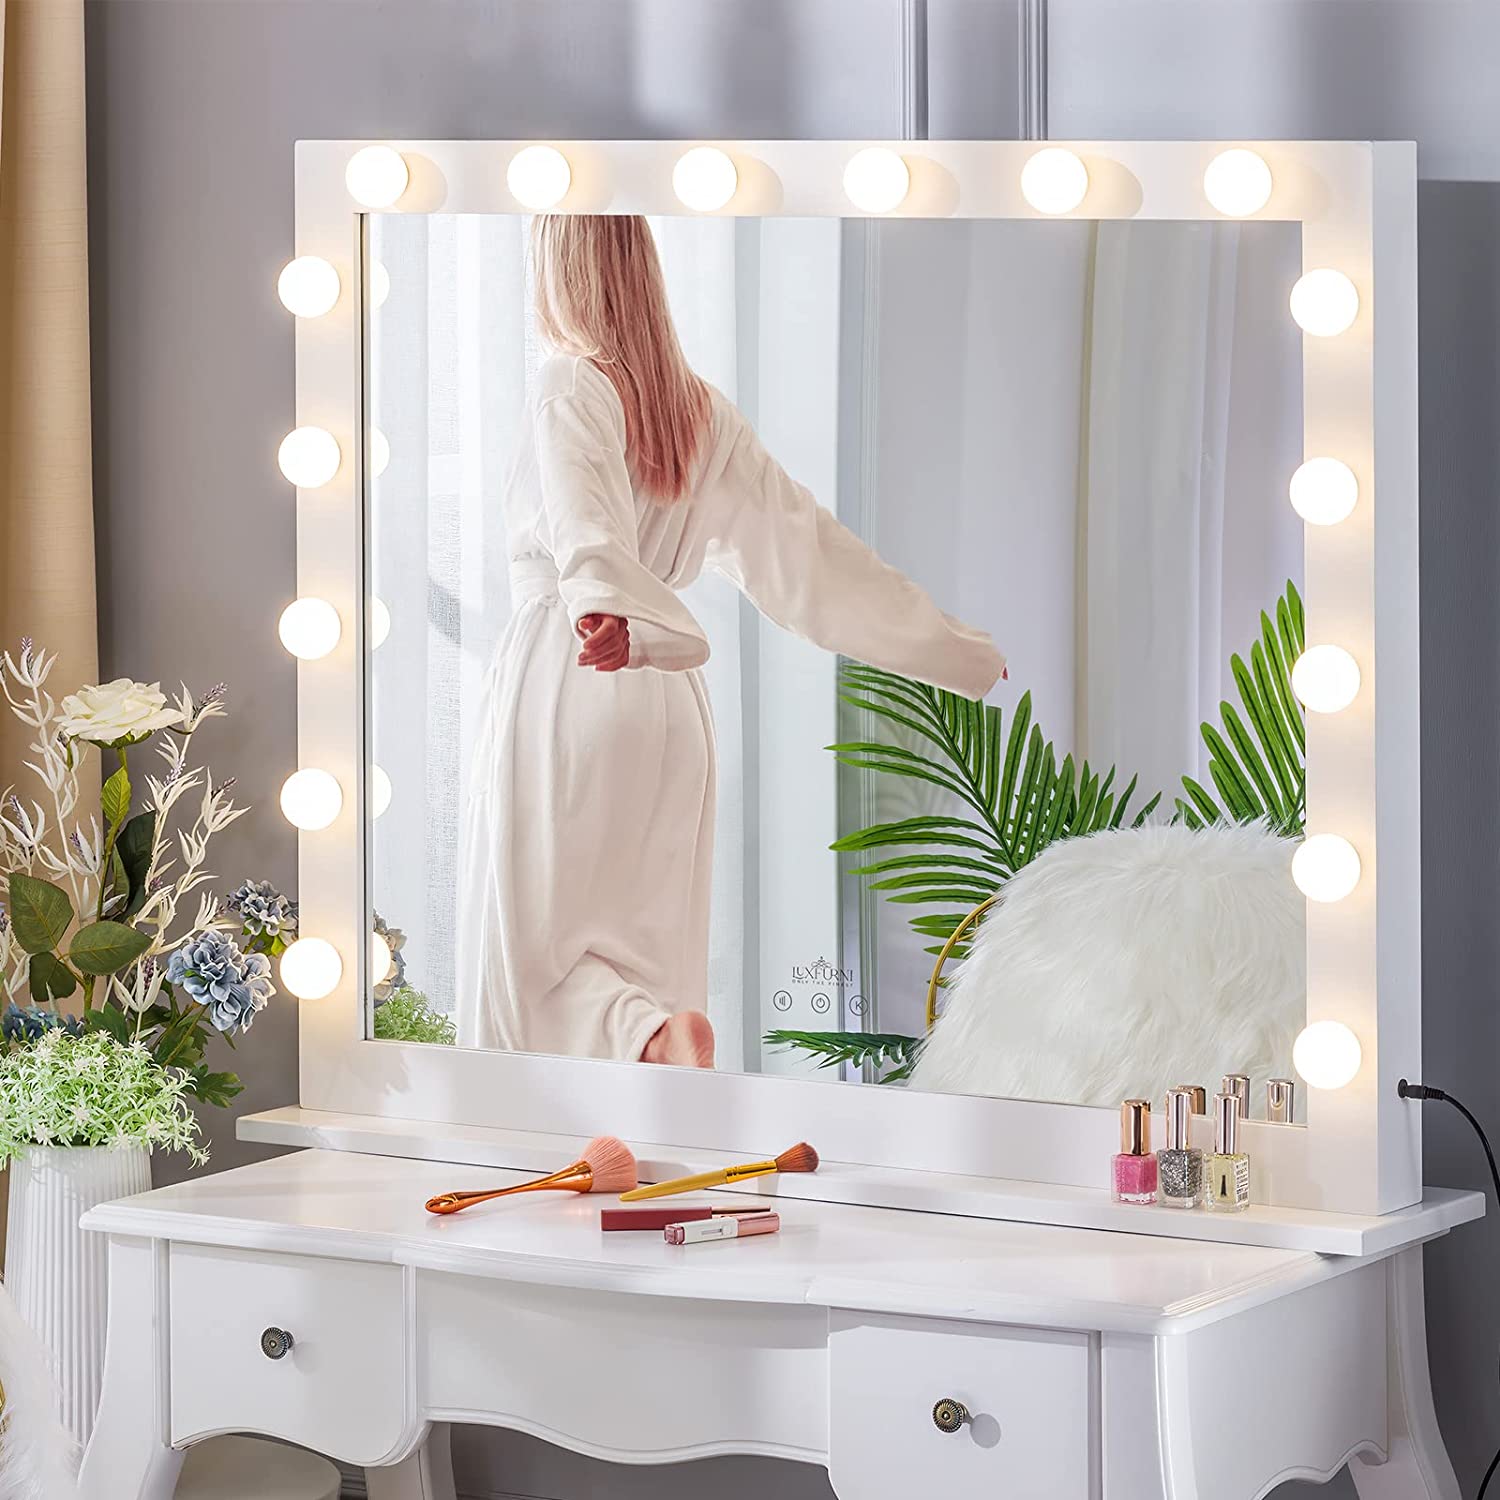 Luxfurni | Hollywood Mirror | Professional Hollywood Max2 Pro LED Vanity Mirror - White